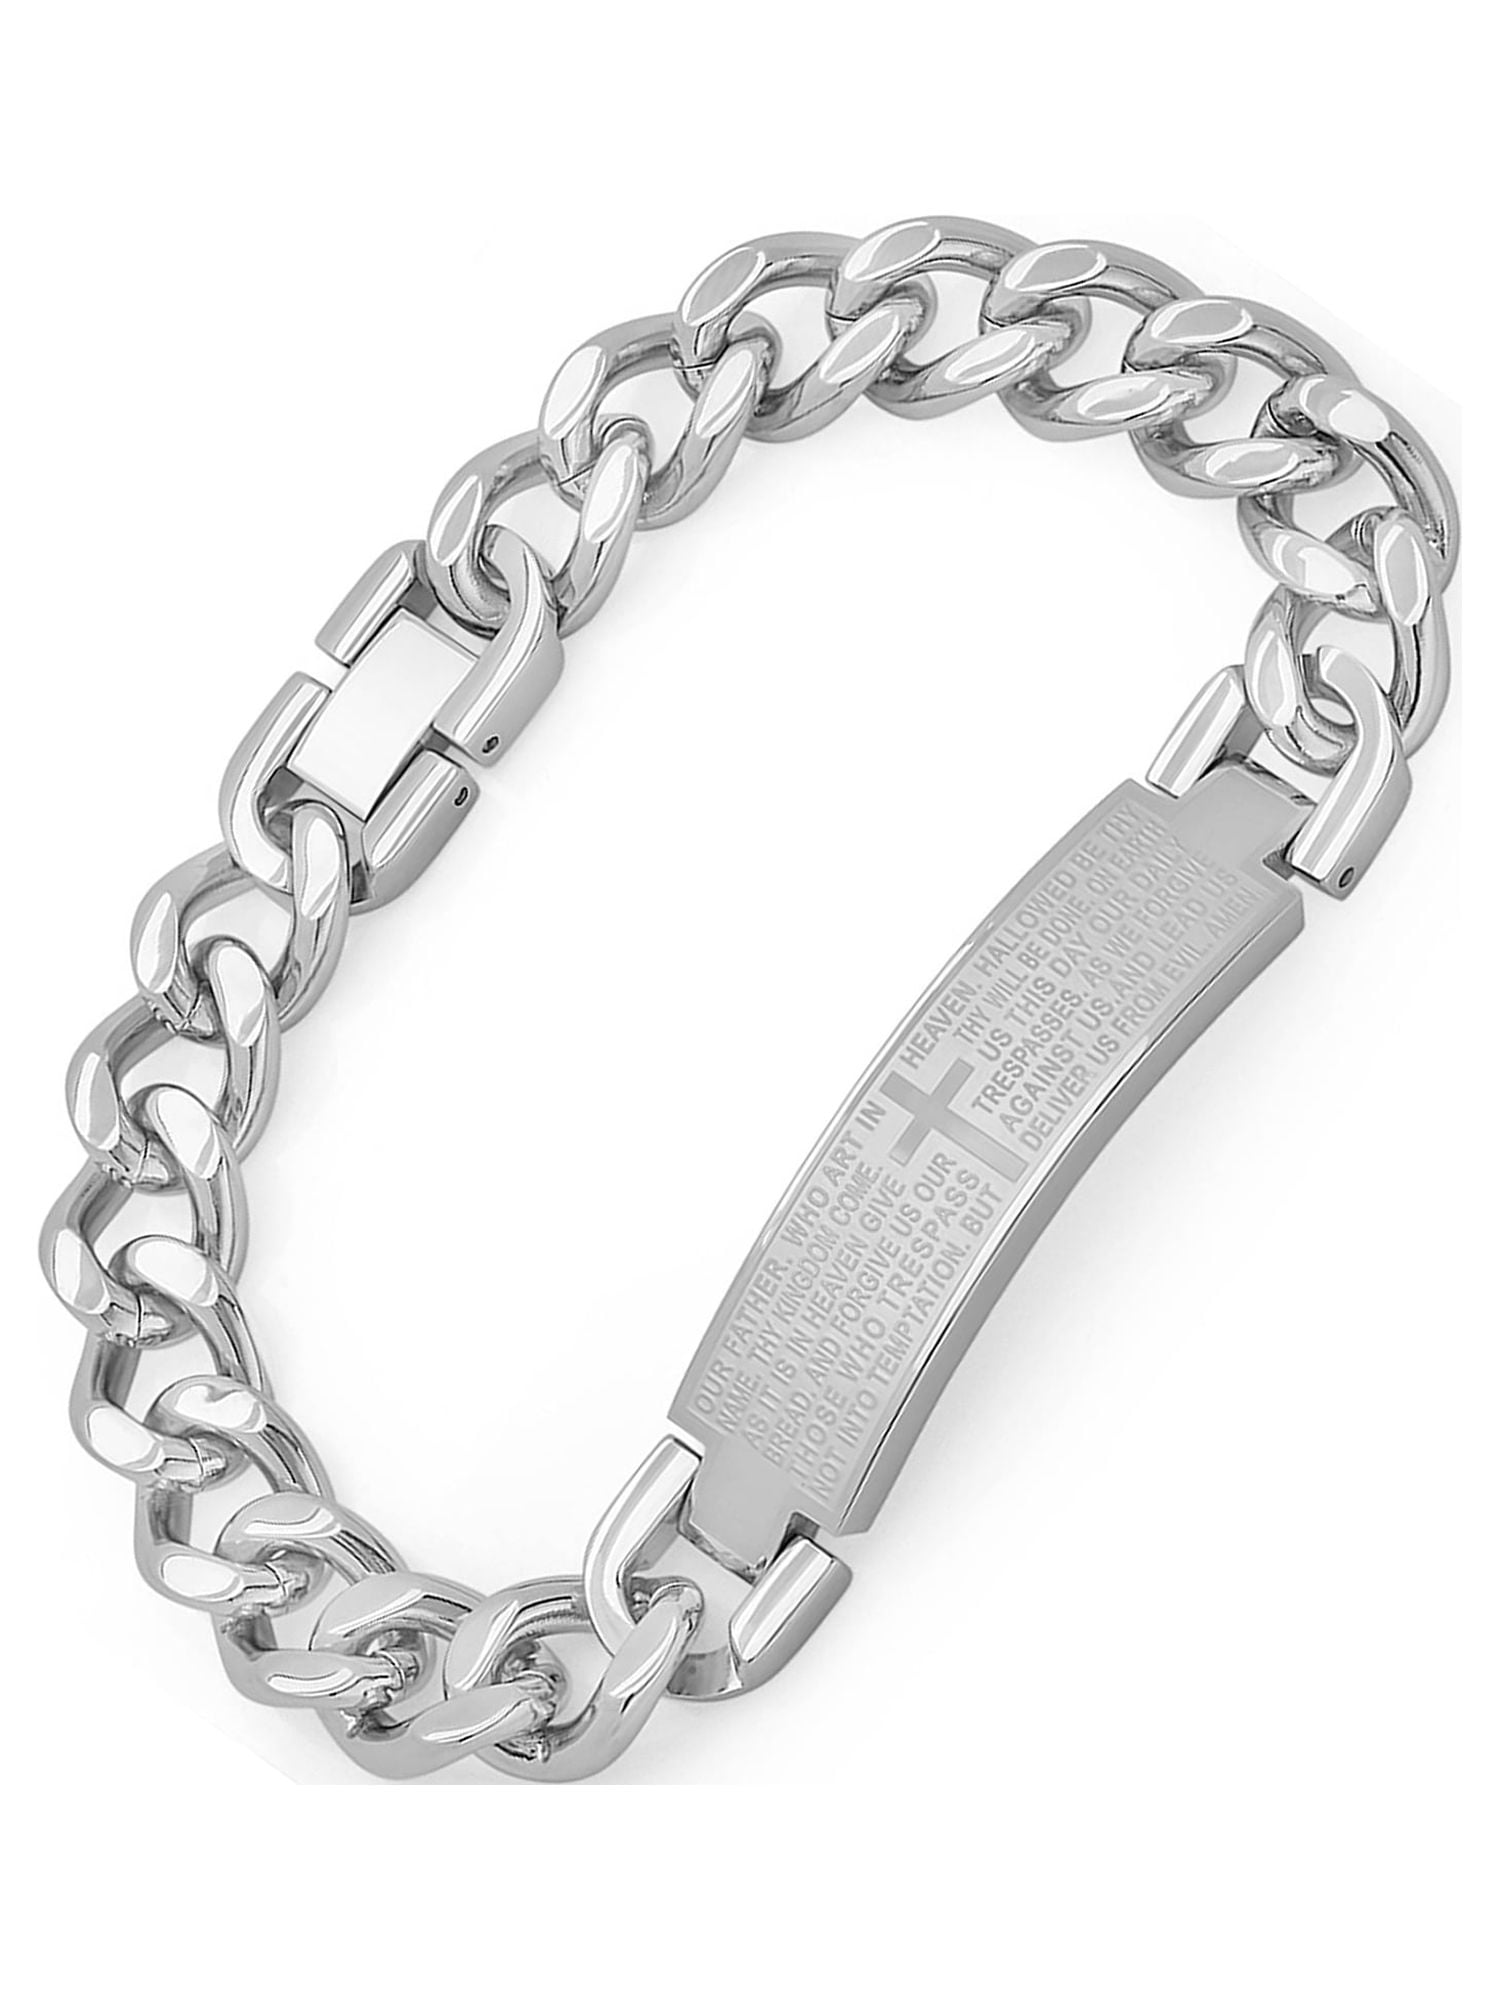  Name Bracelet Stainless Steel ID Bracelets for Men Chain Link  Bracelet Personalized Bracelets: Clothing, Shoes & Jewelry